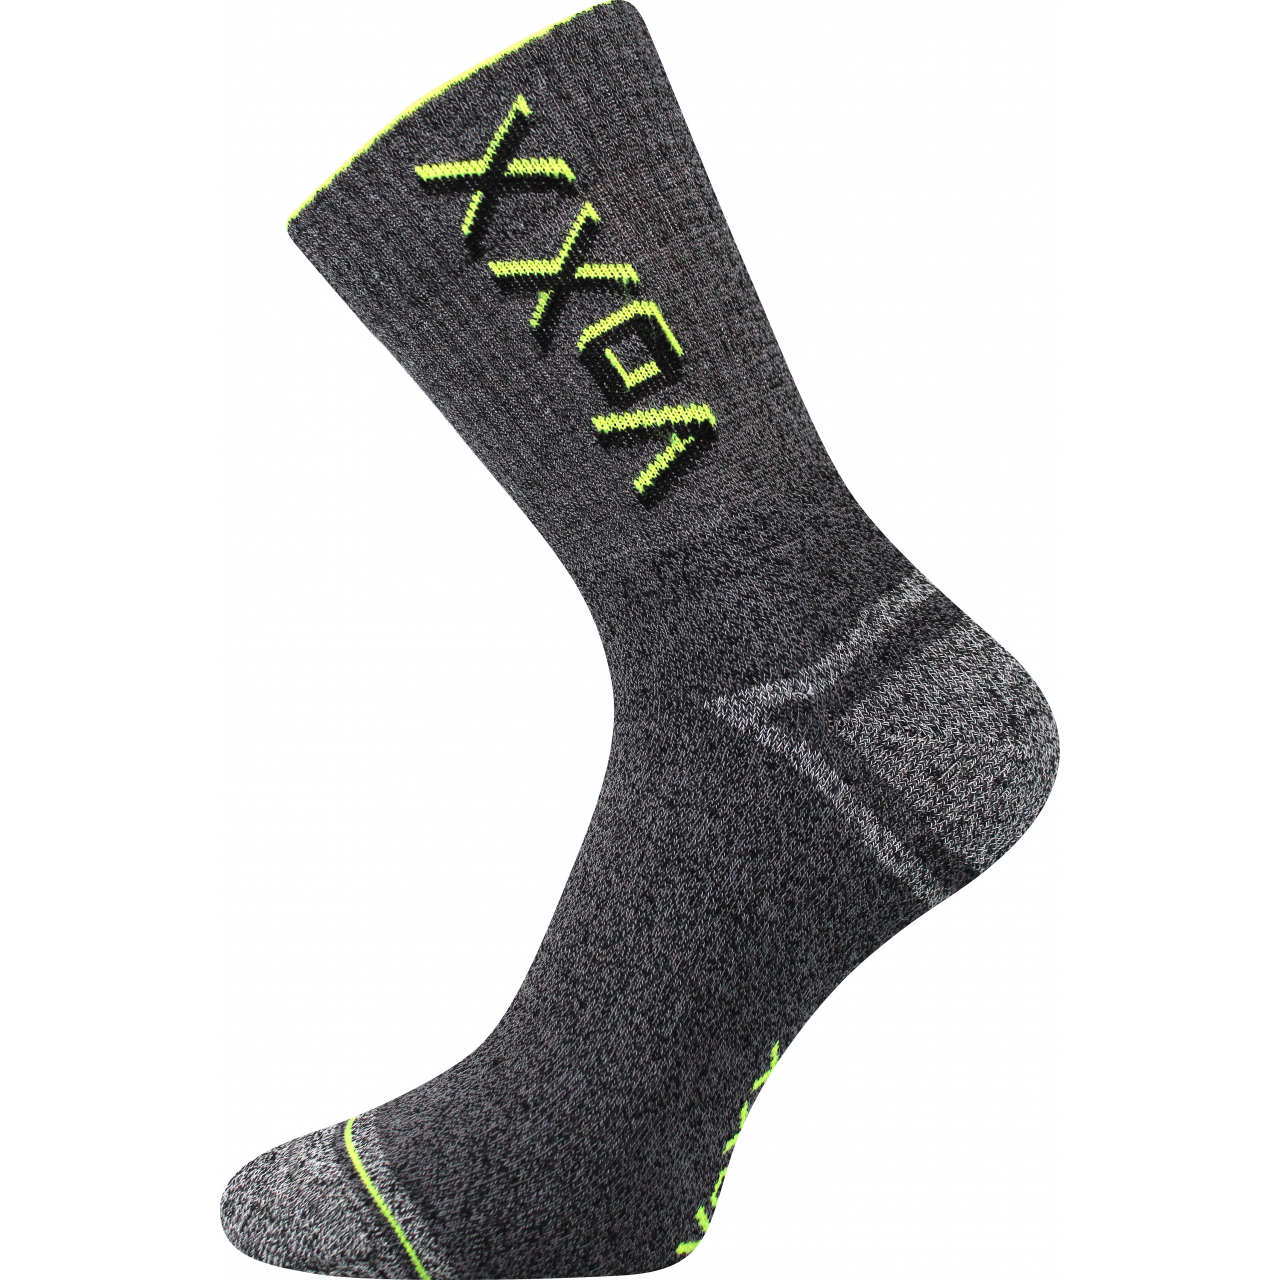 Ponožky unisex froté Voxx Hawk - šedé-žluté, 35-38